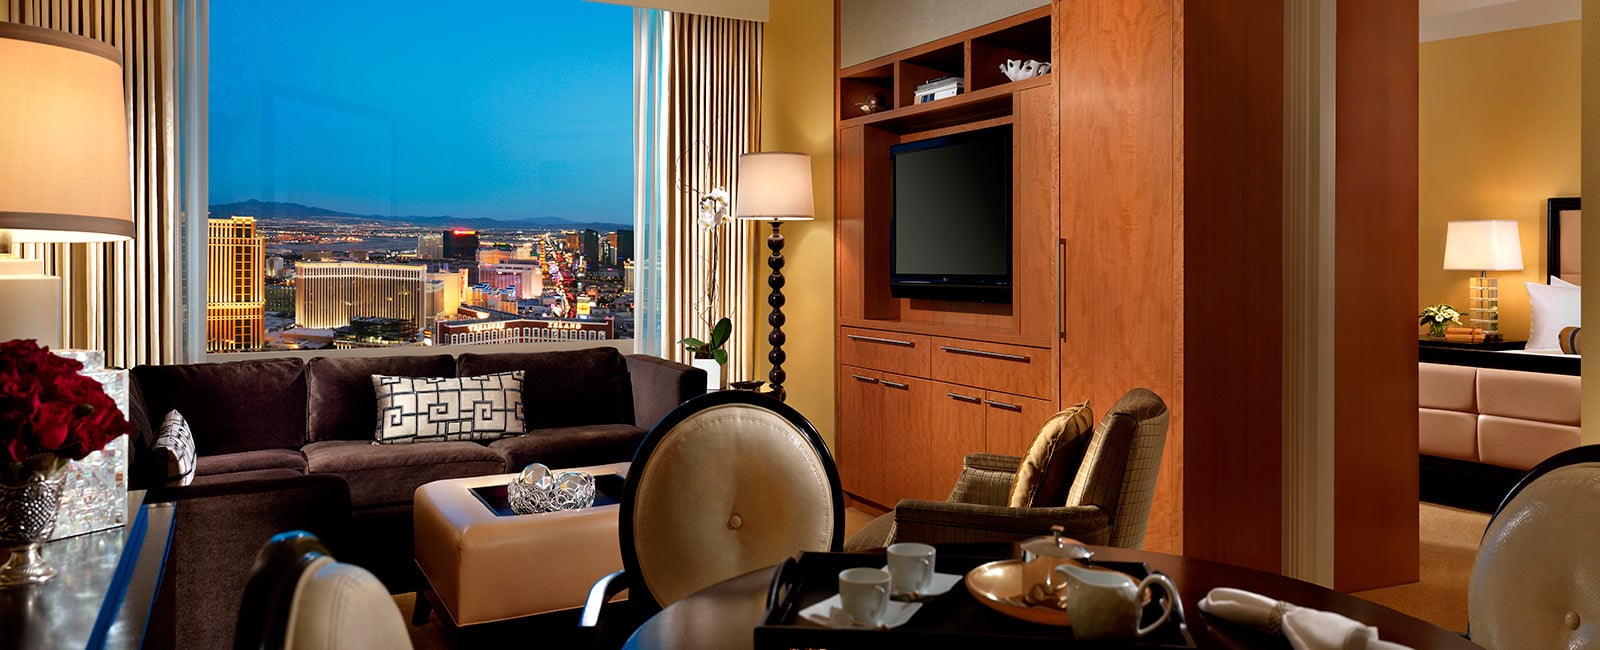 Living Area at Trump International Hotel in Las Vegas, Nevada